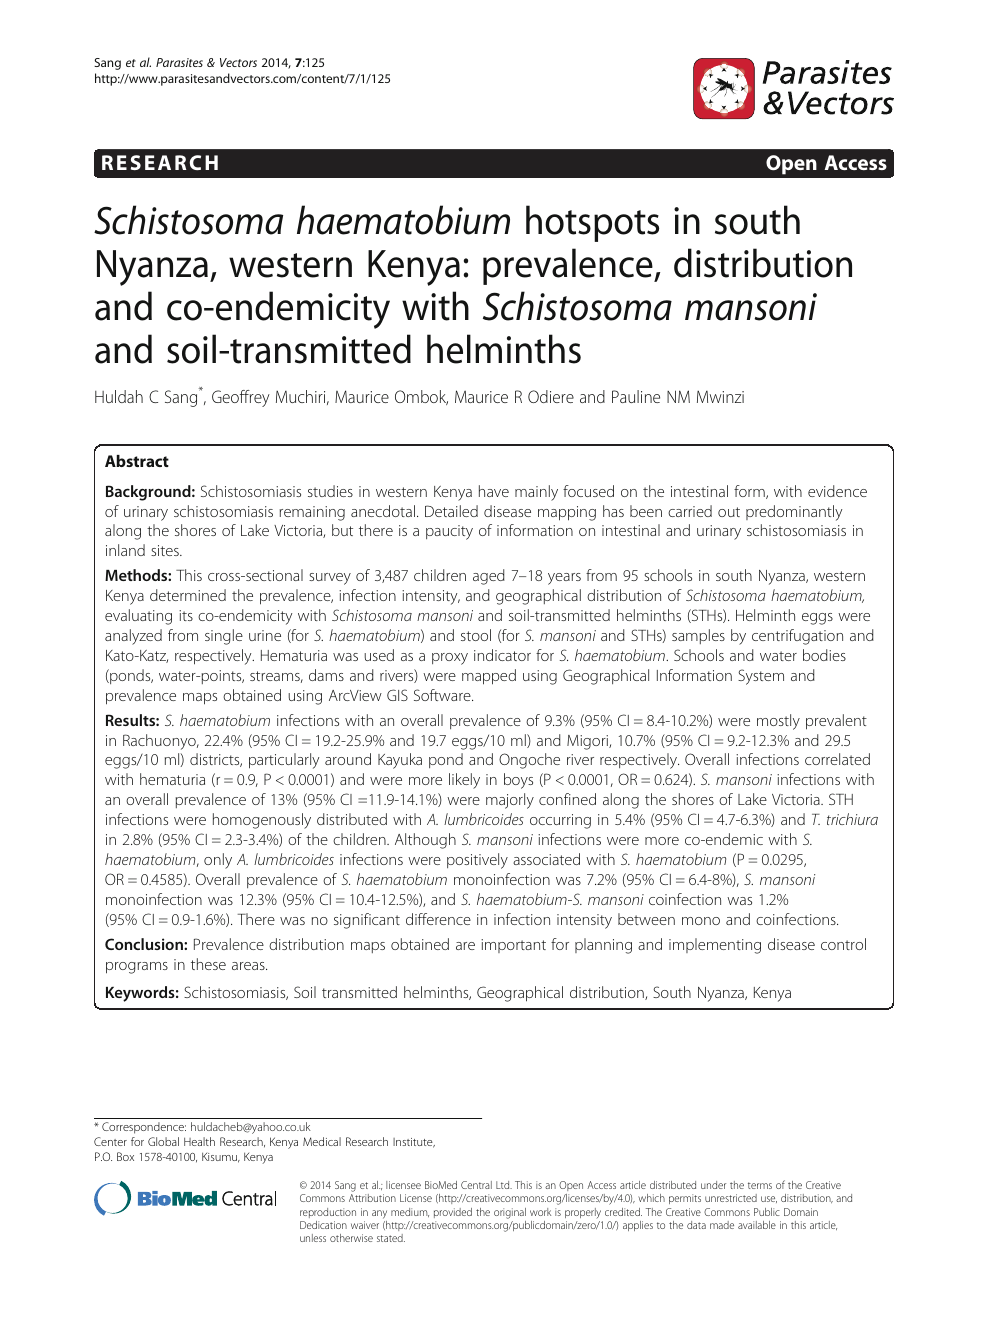 Schistosomiasis kenya, Traducere 